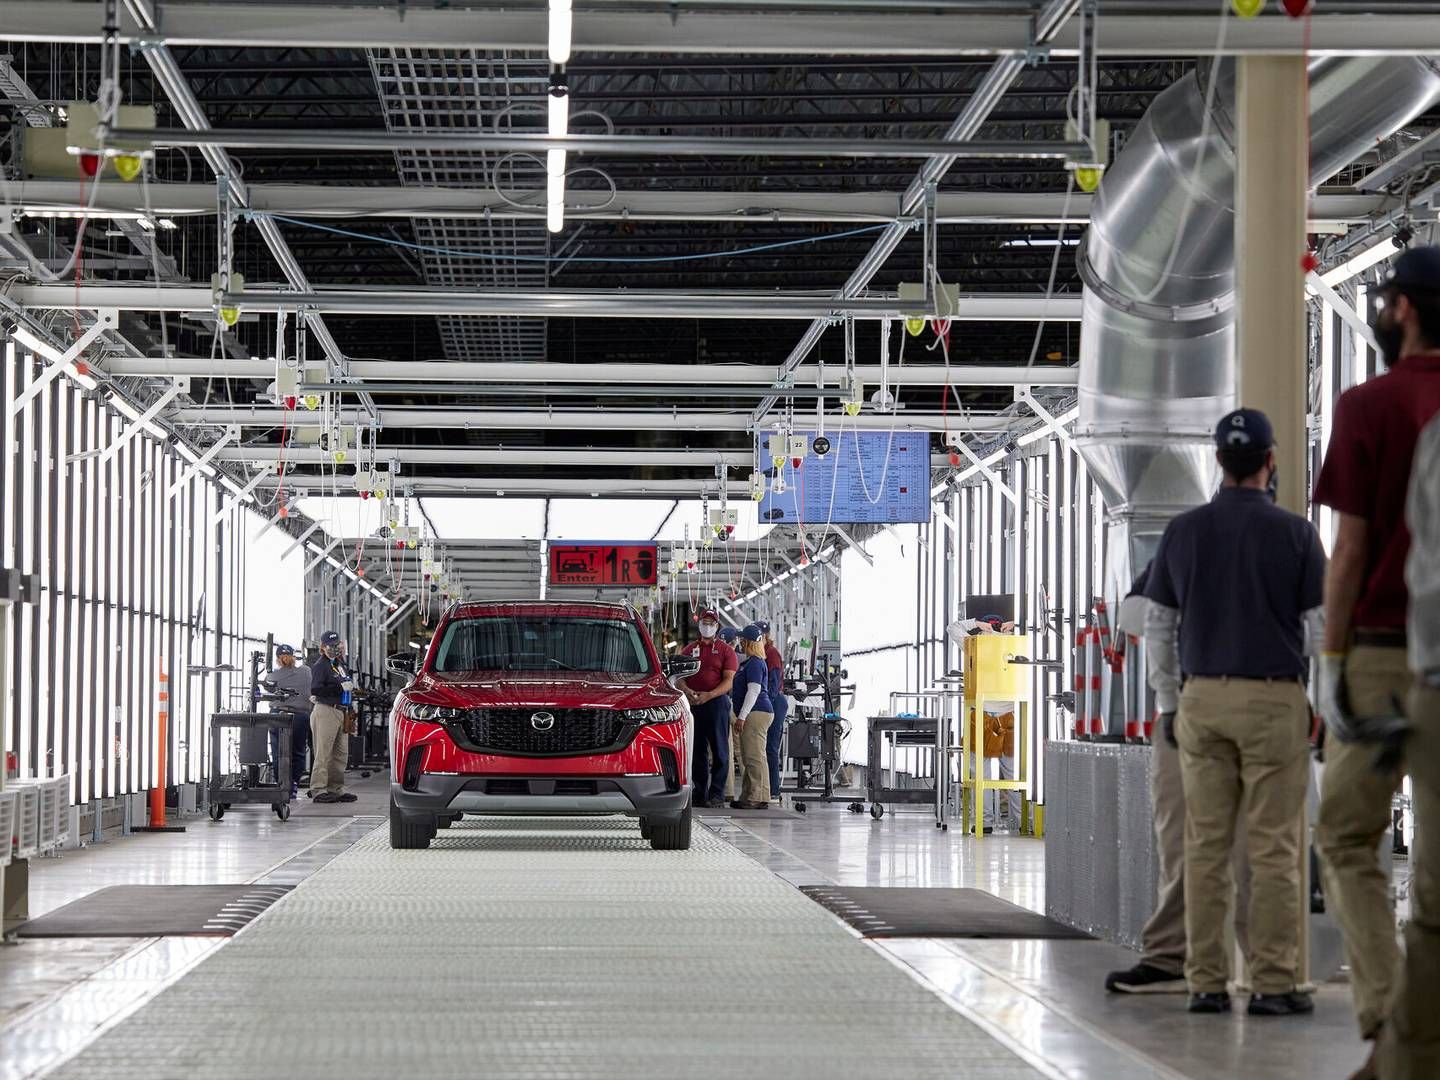 Bilproducenten Mazda vil med aftalen skabe en bedre brugeroplevelse. | Foto: Jon Morgan/AP/Ritzau Scanpix